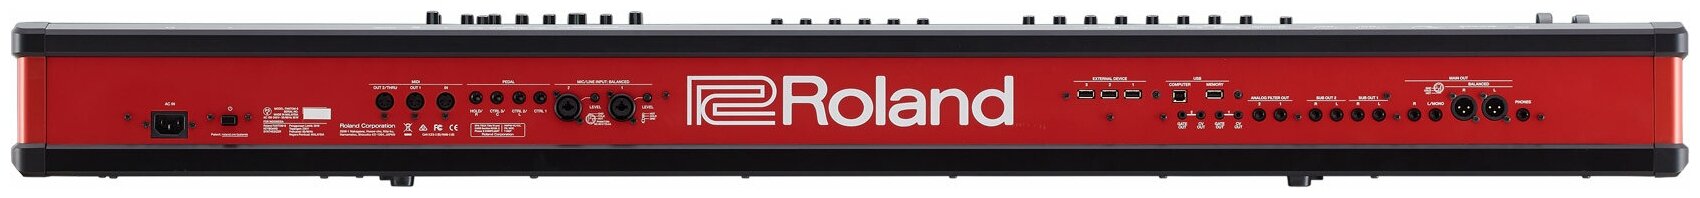 Синтезатор Roland - фото №3